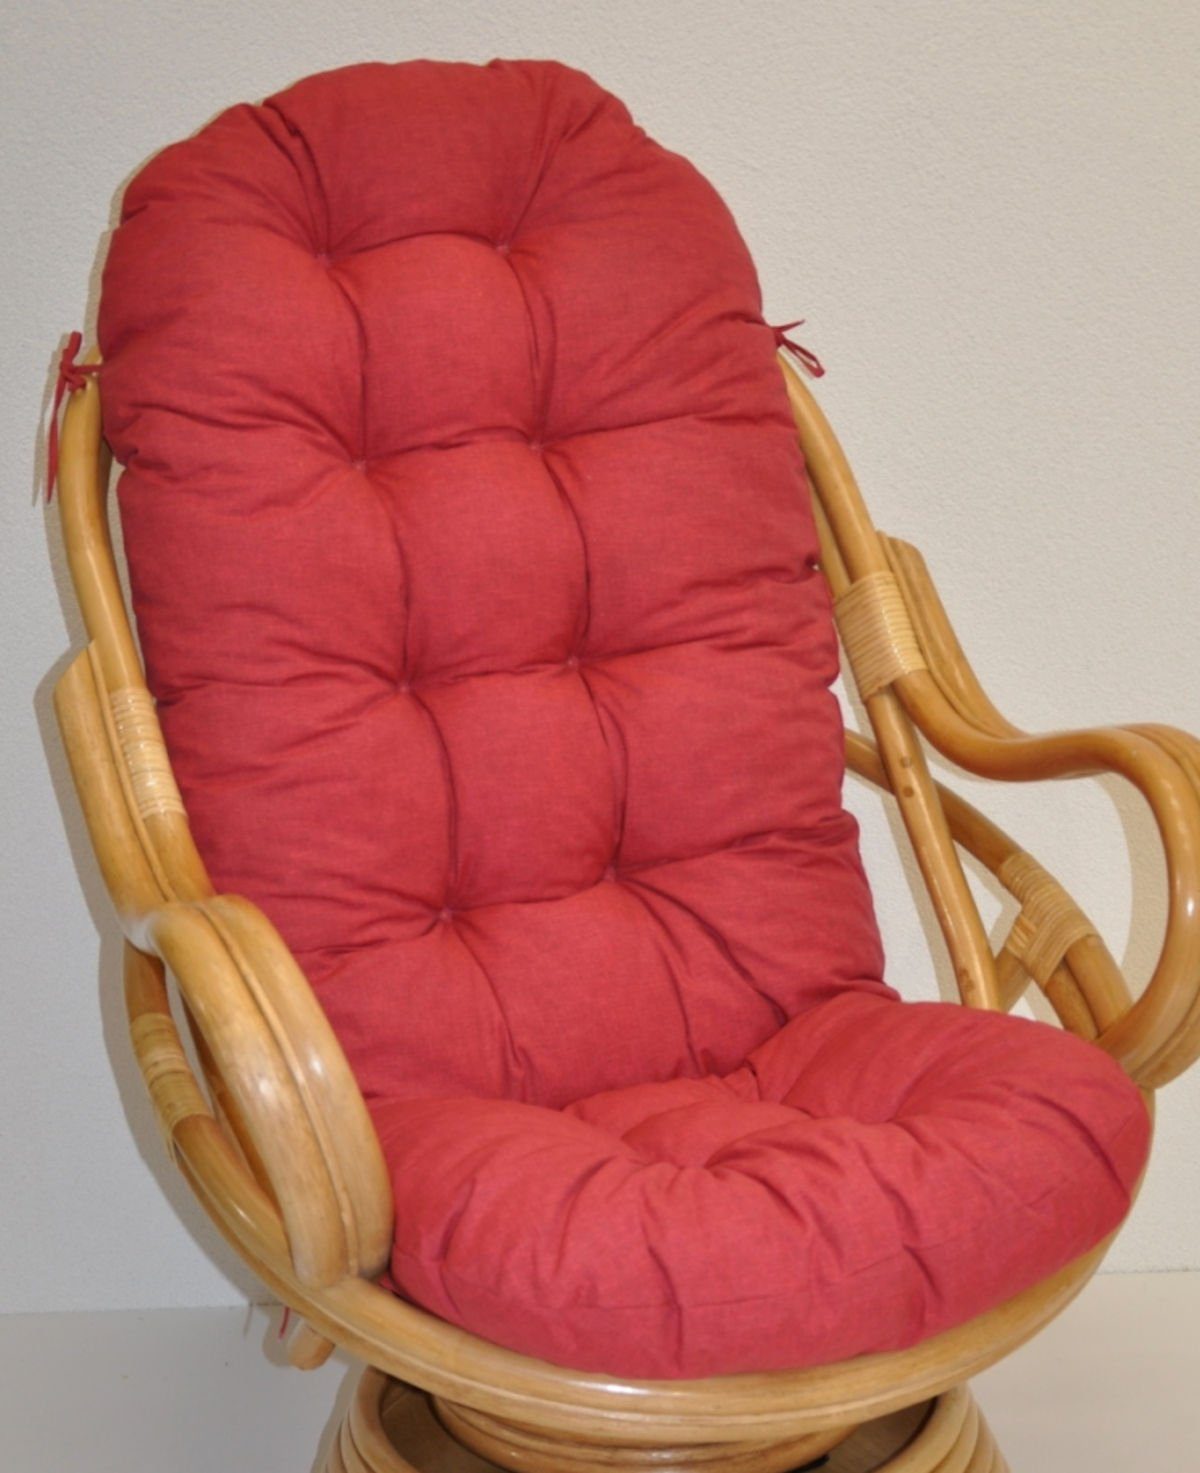 Rattani Sesselauflage Polster für Rattan Schaukelstuhl, Drehsessel L 135 cm, Color rot